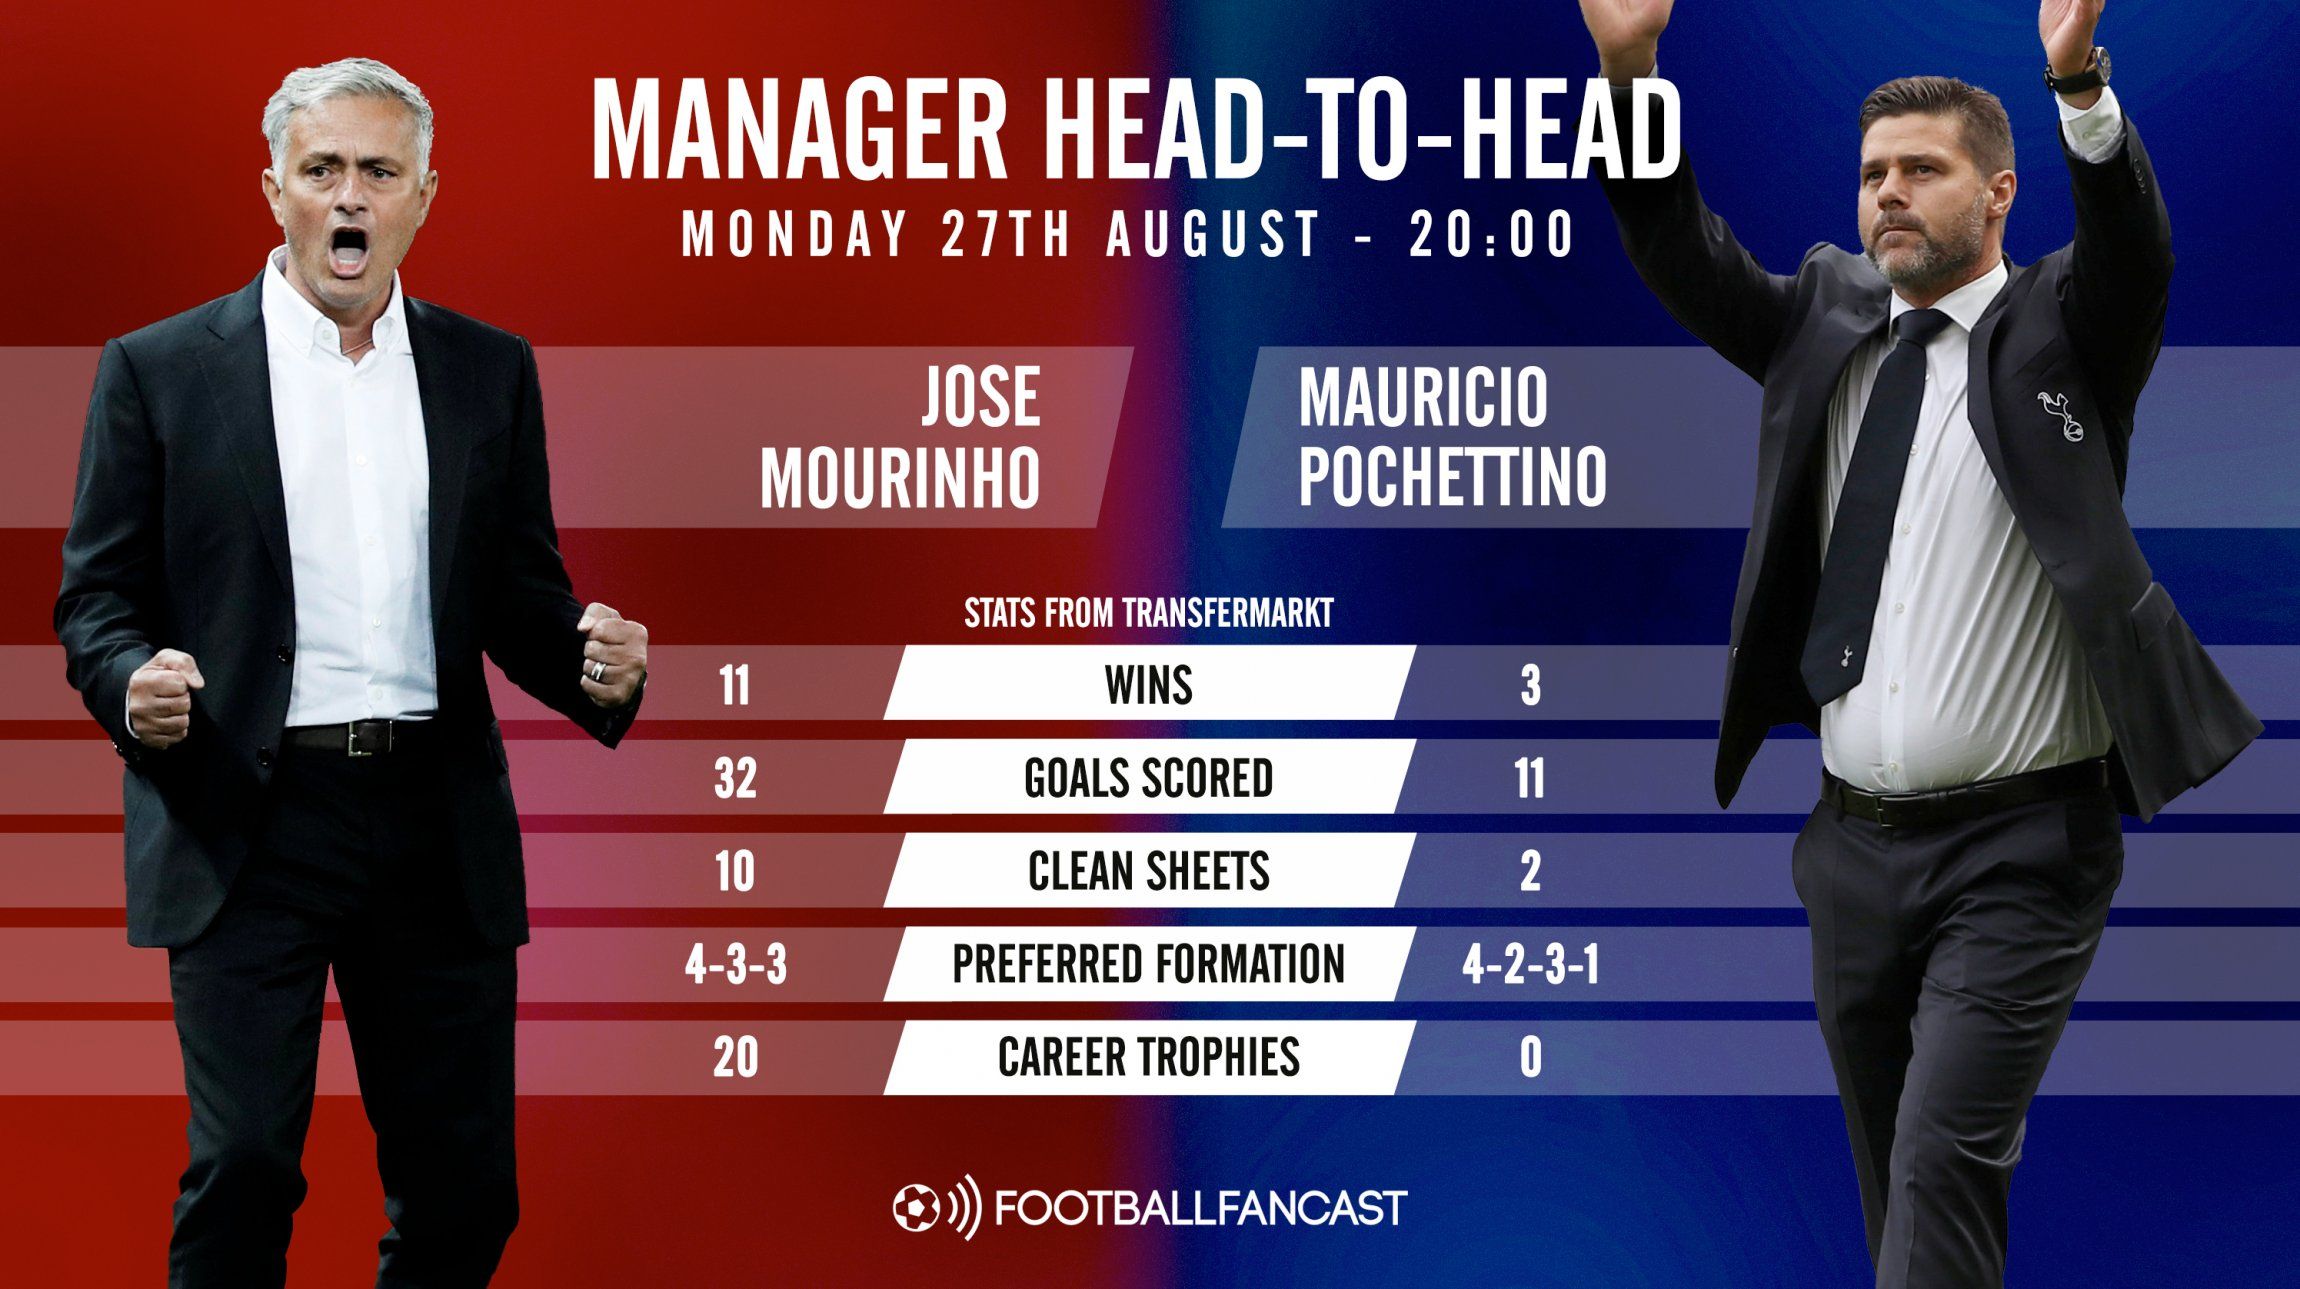 Jose Mourinho vs Mauricio Pochettino